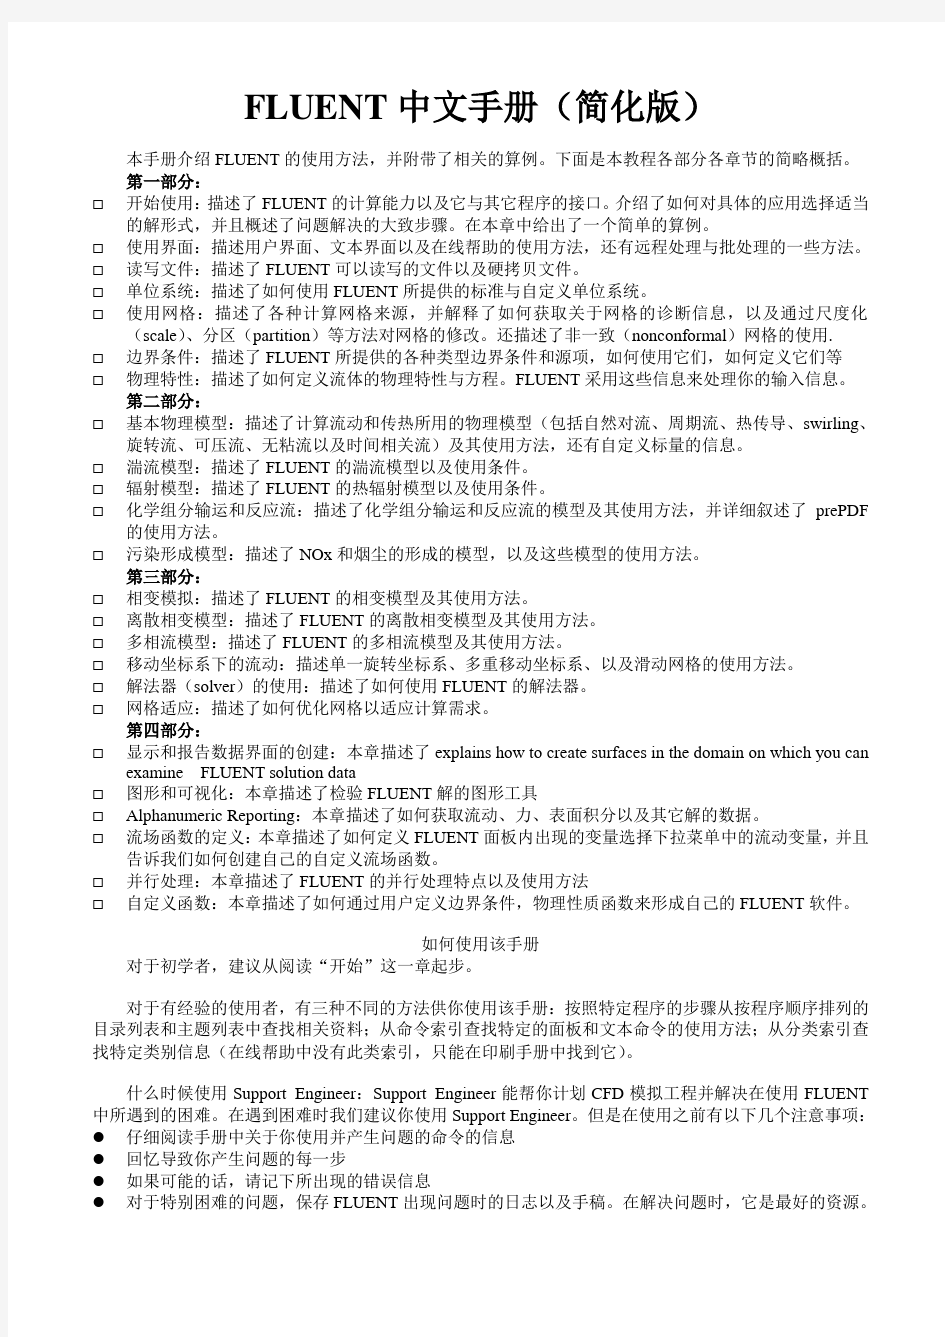 FLUENT中文手册(简化版)